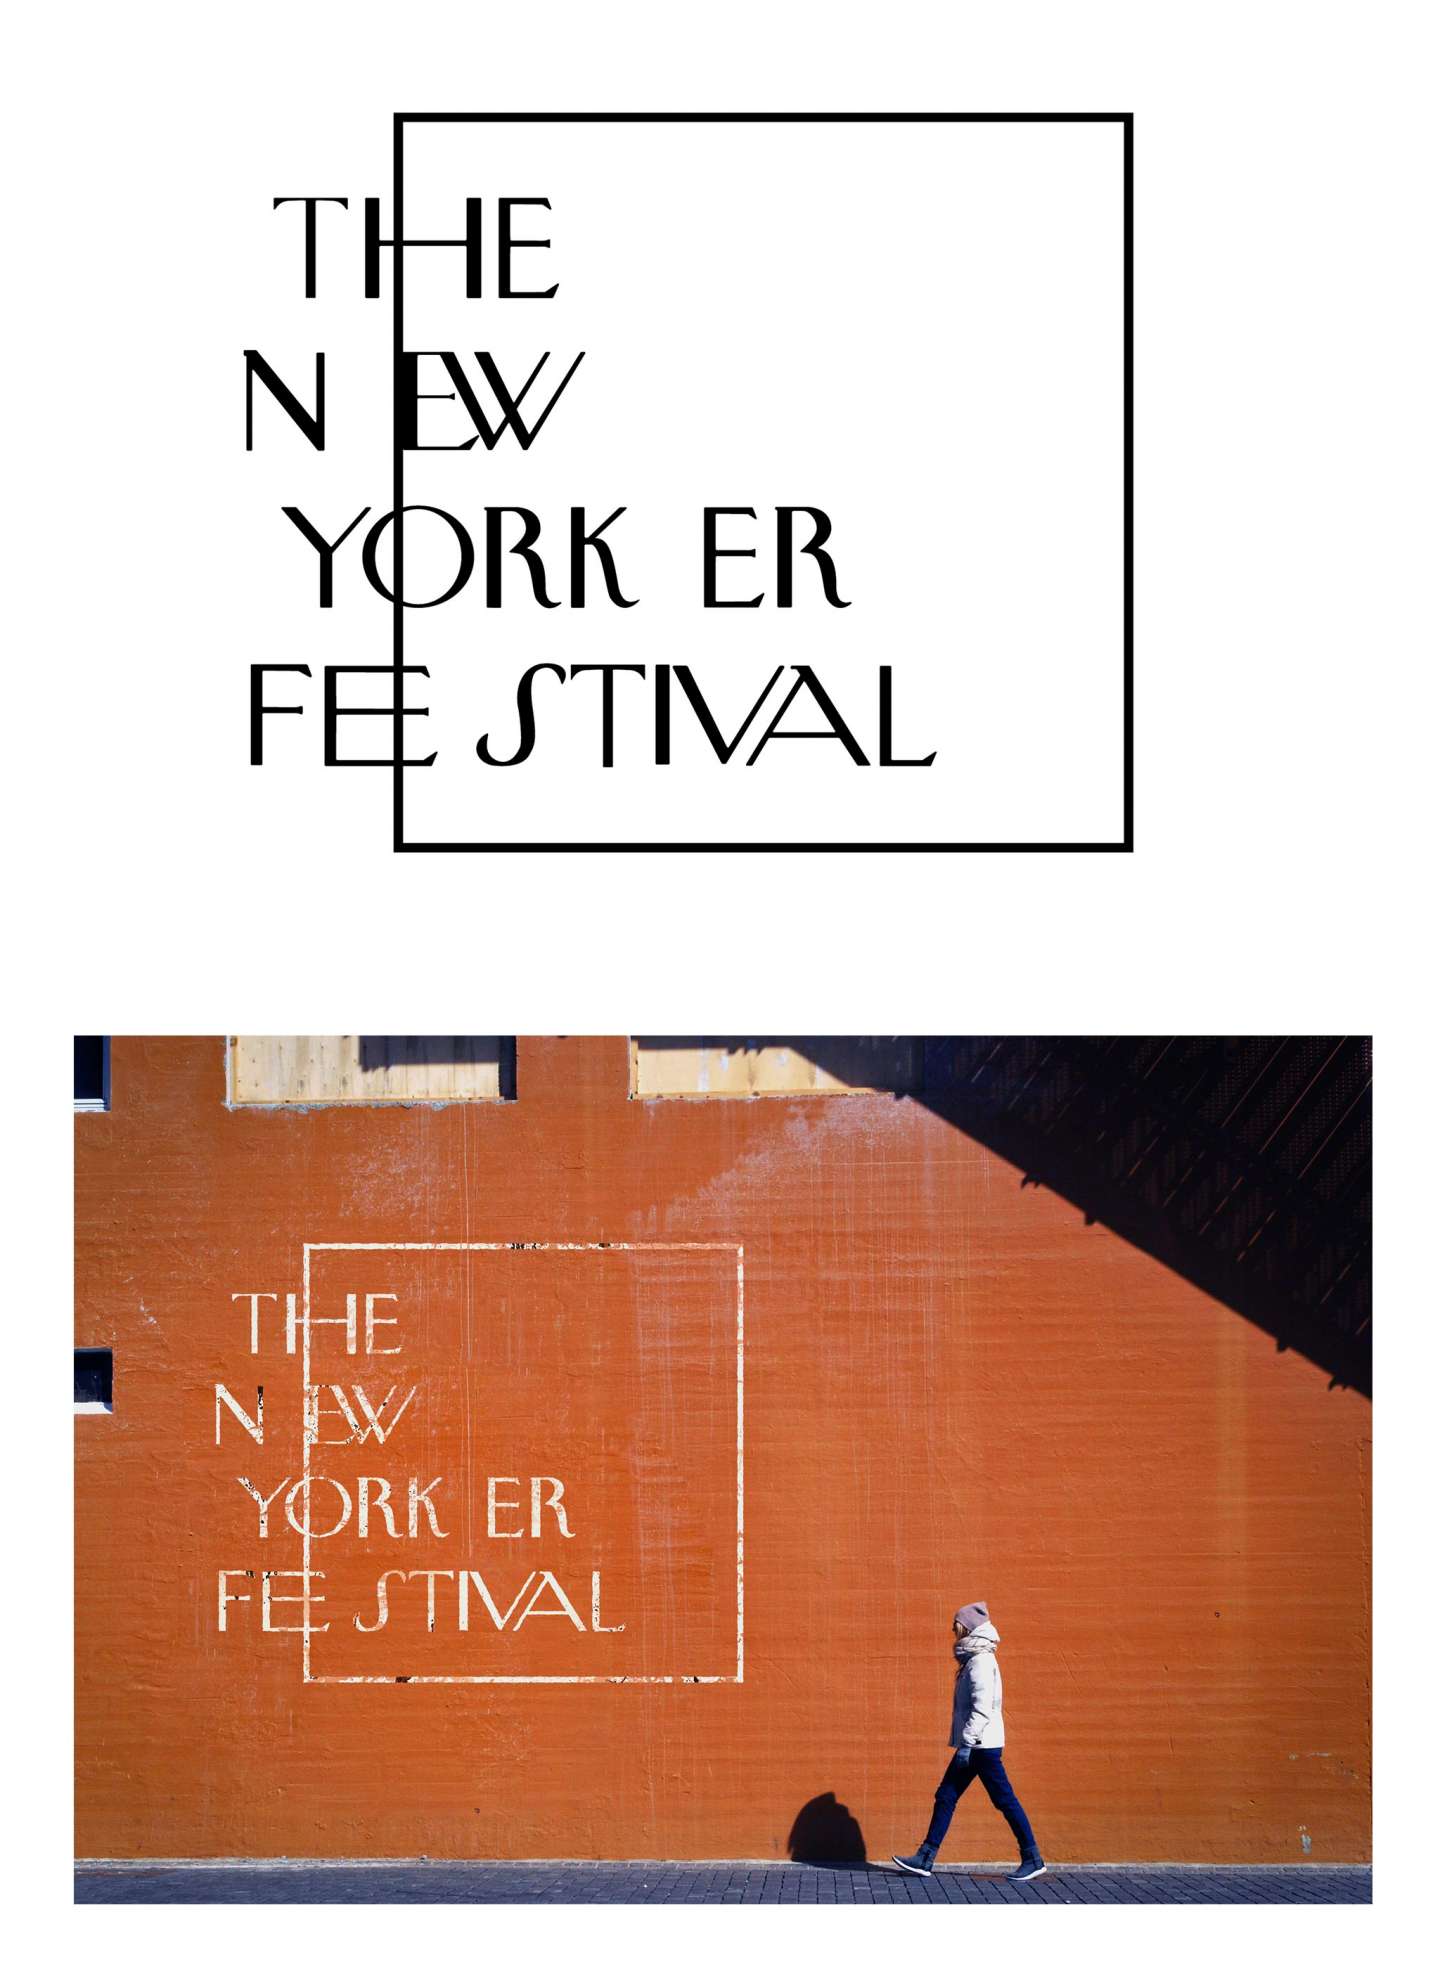 The New Yorker Festival